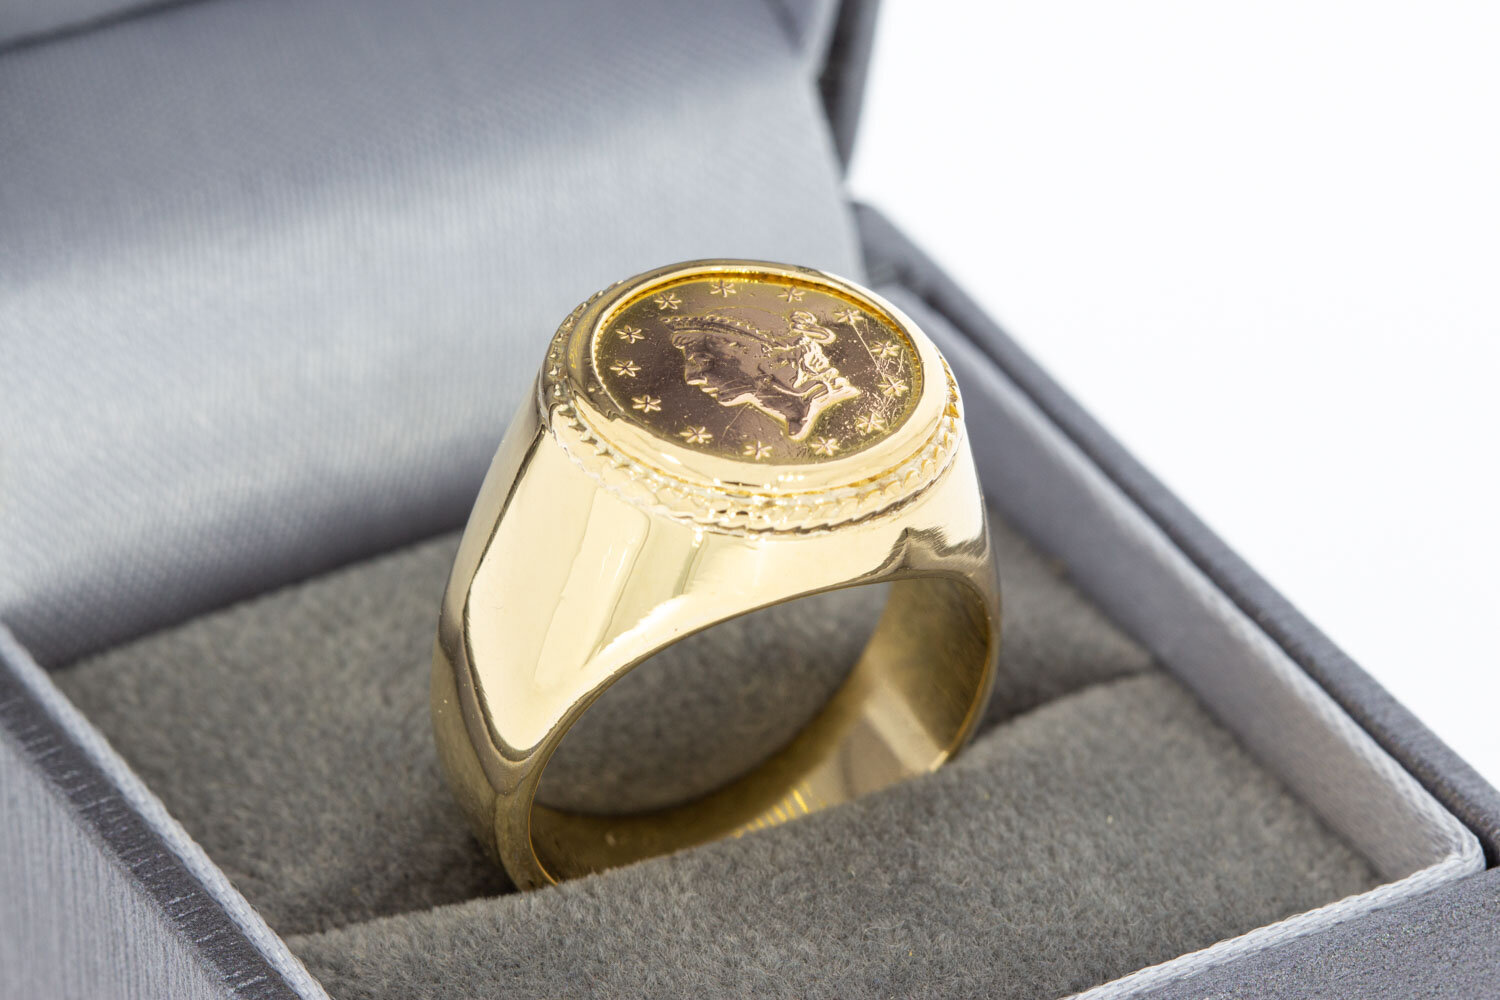 Münzring 18 Karat Gold - Ringgröße 18,8 mm